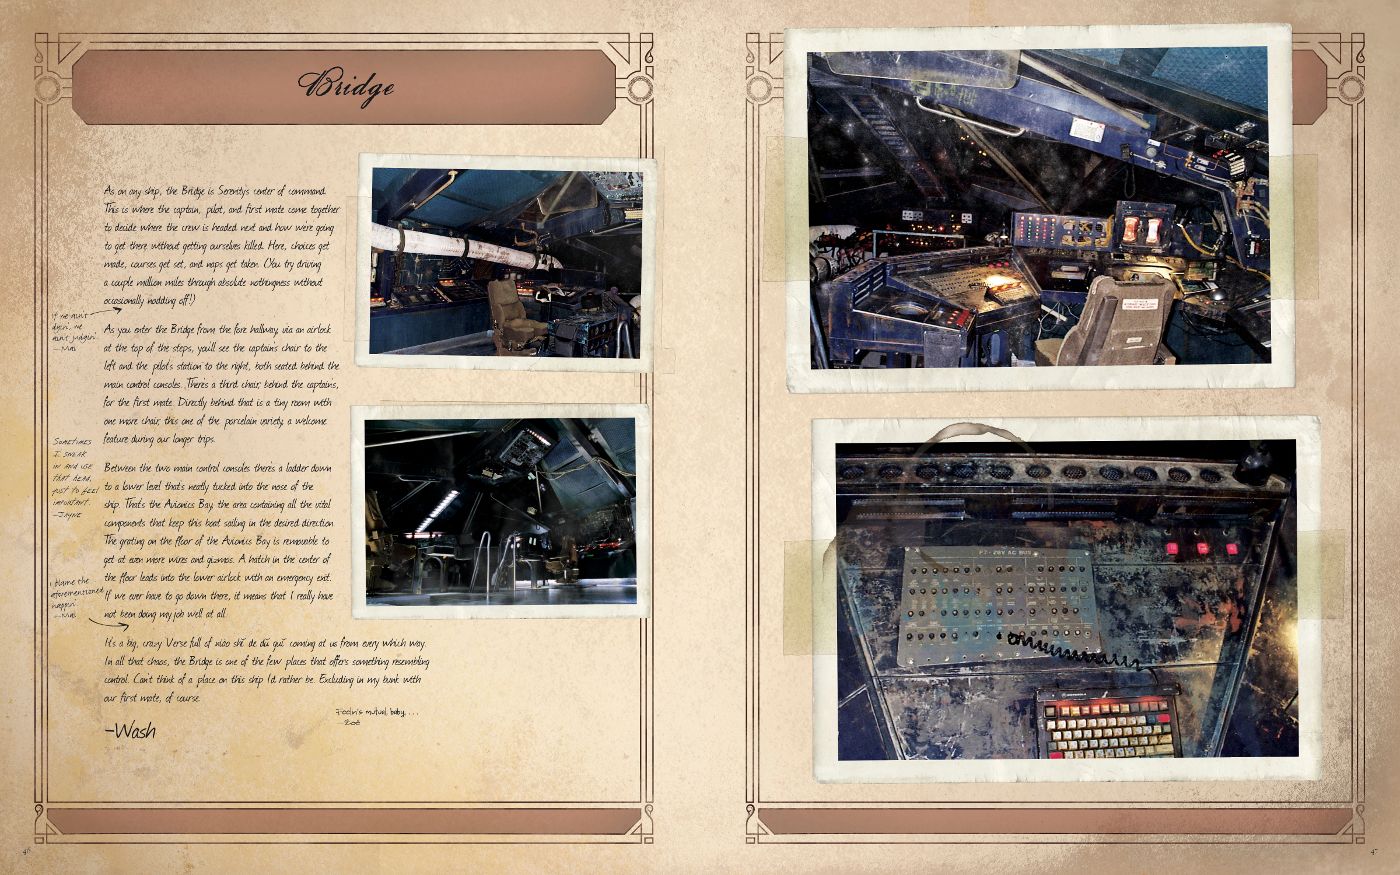 Serenity Handbook Firefly Notes On The Bridge Of The Ship